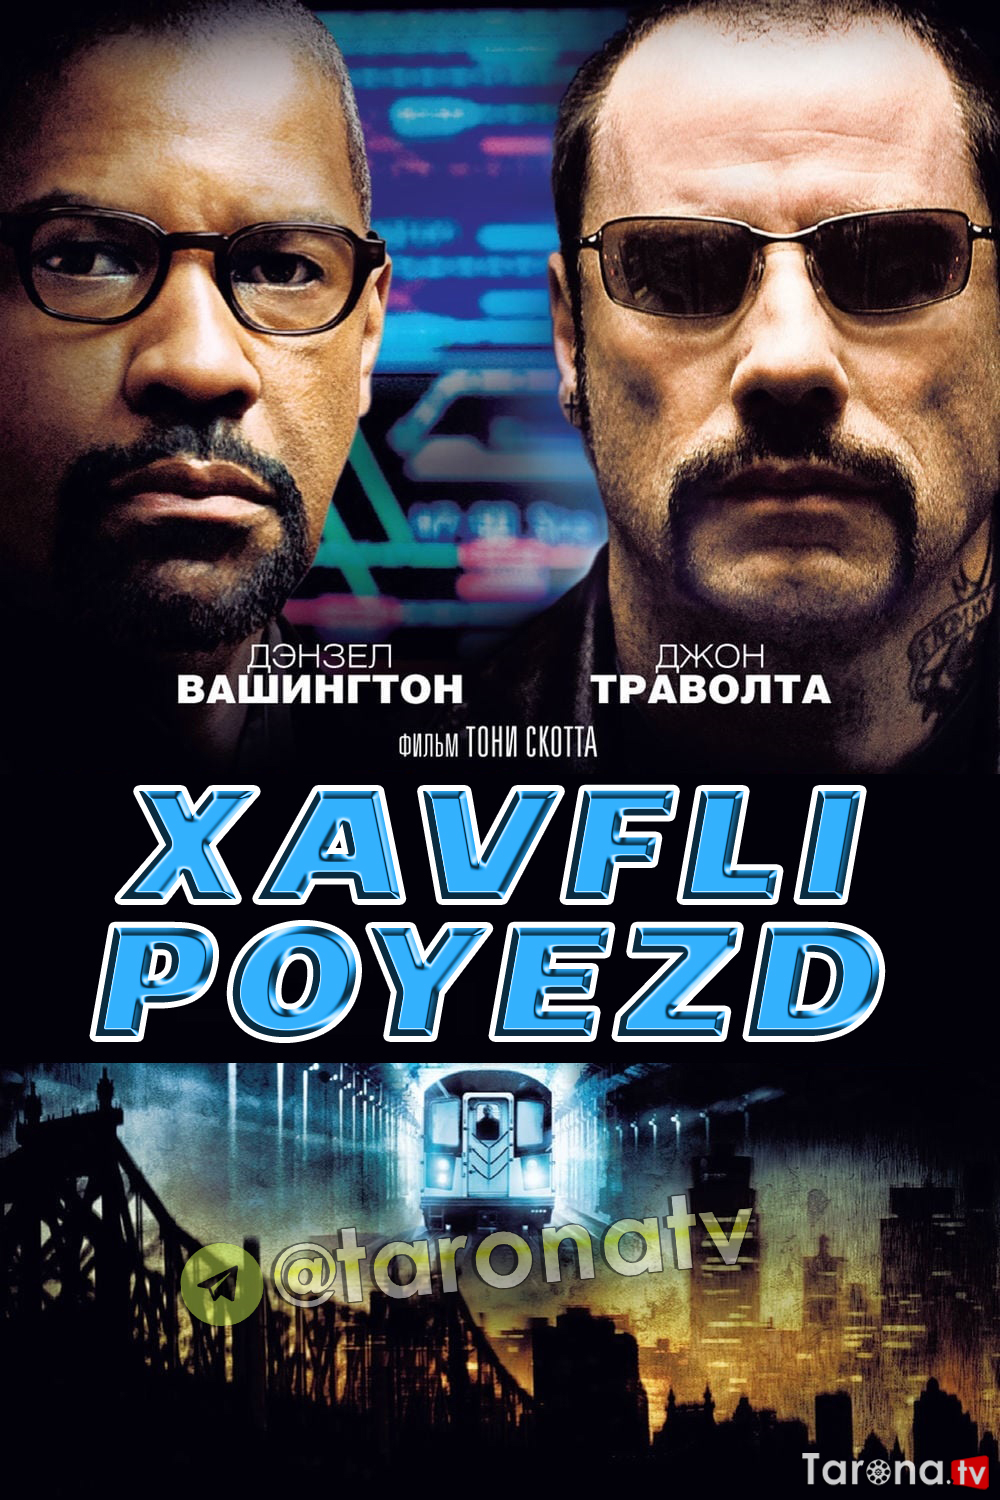 Xavfli Poyezd (Uzbek tilida, O'zbekcha tarjima, HD Kino, Jangari, Kriminal) 2009